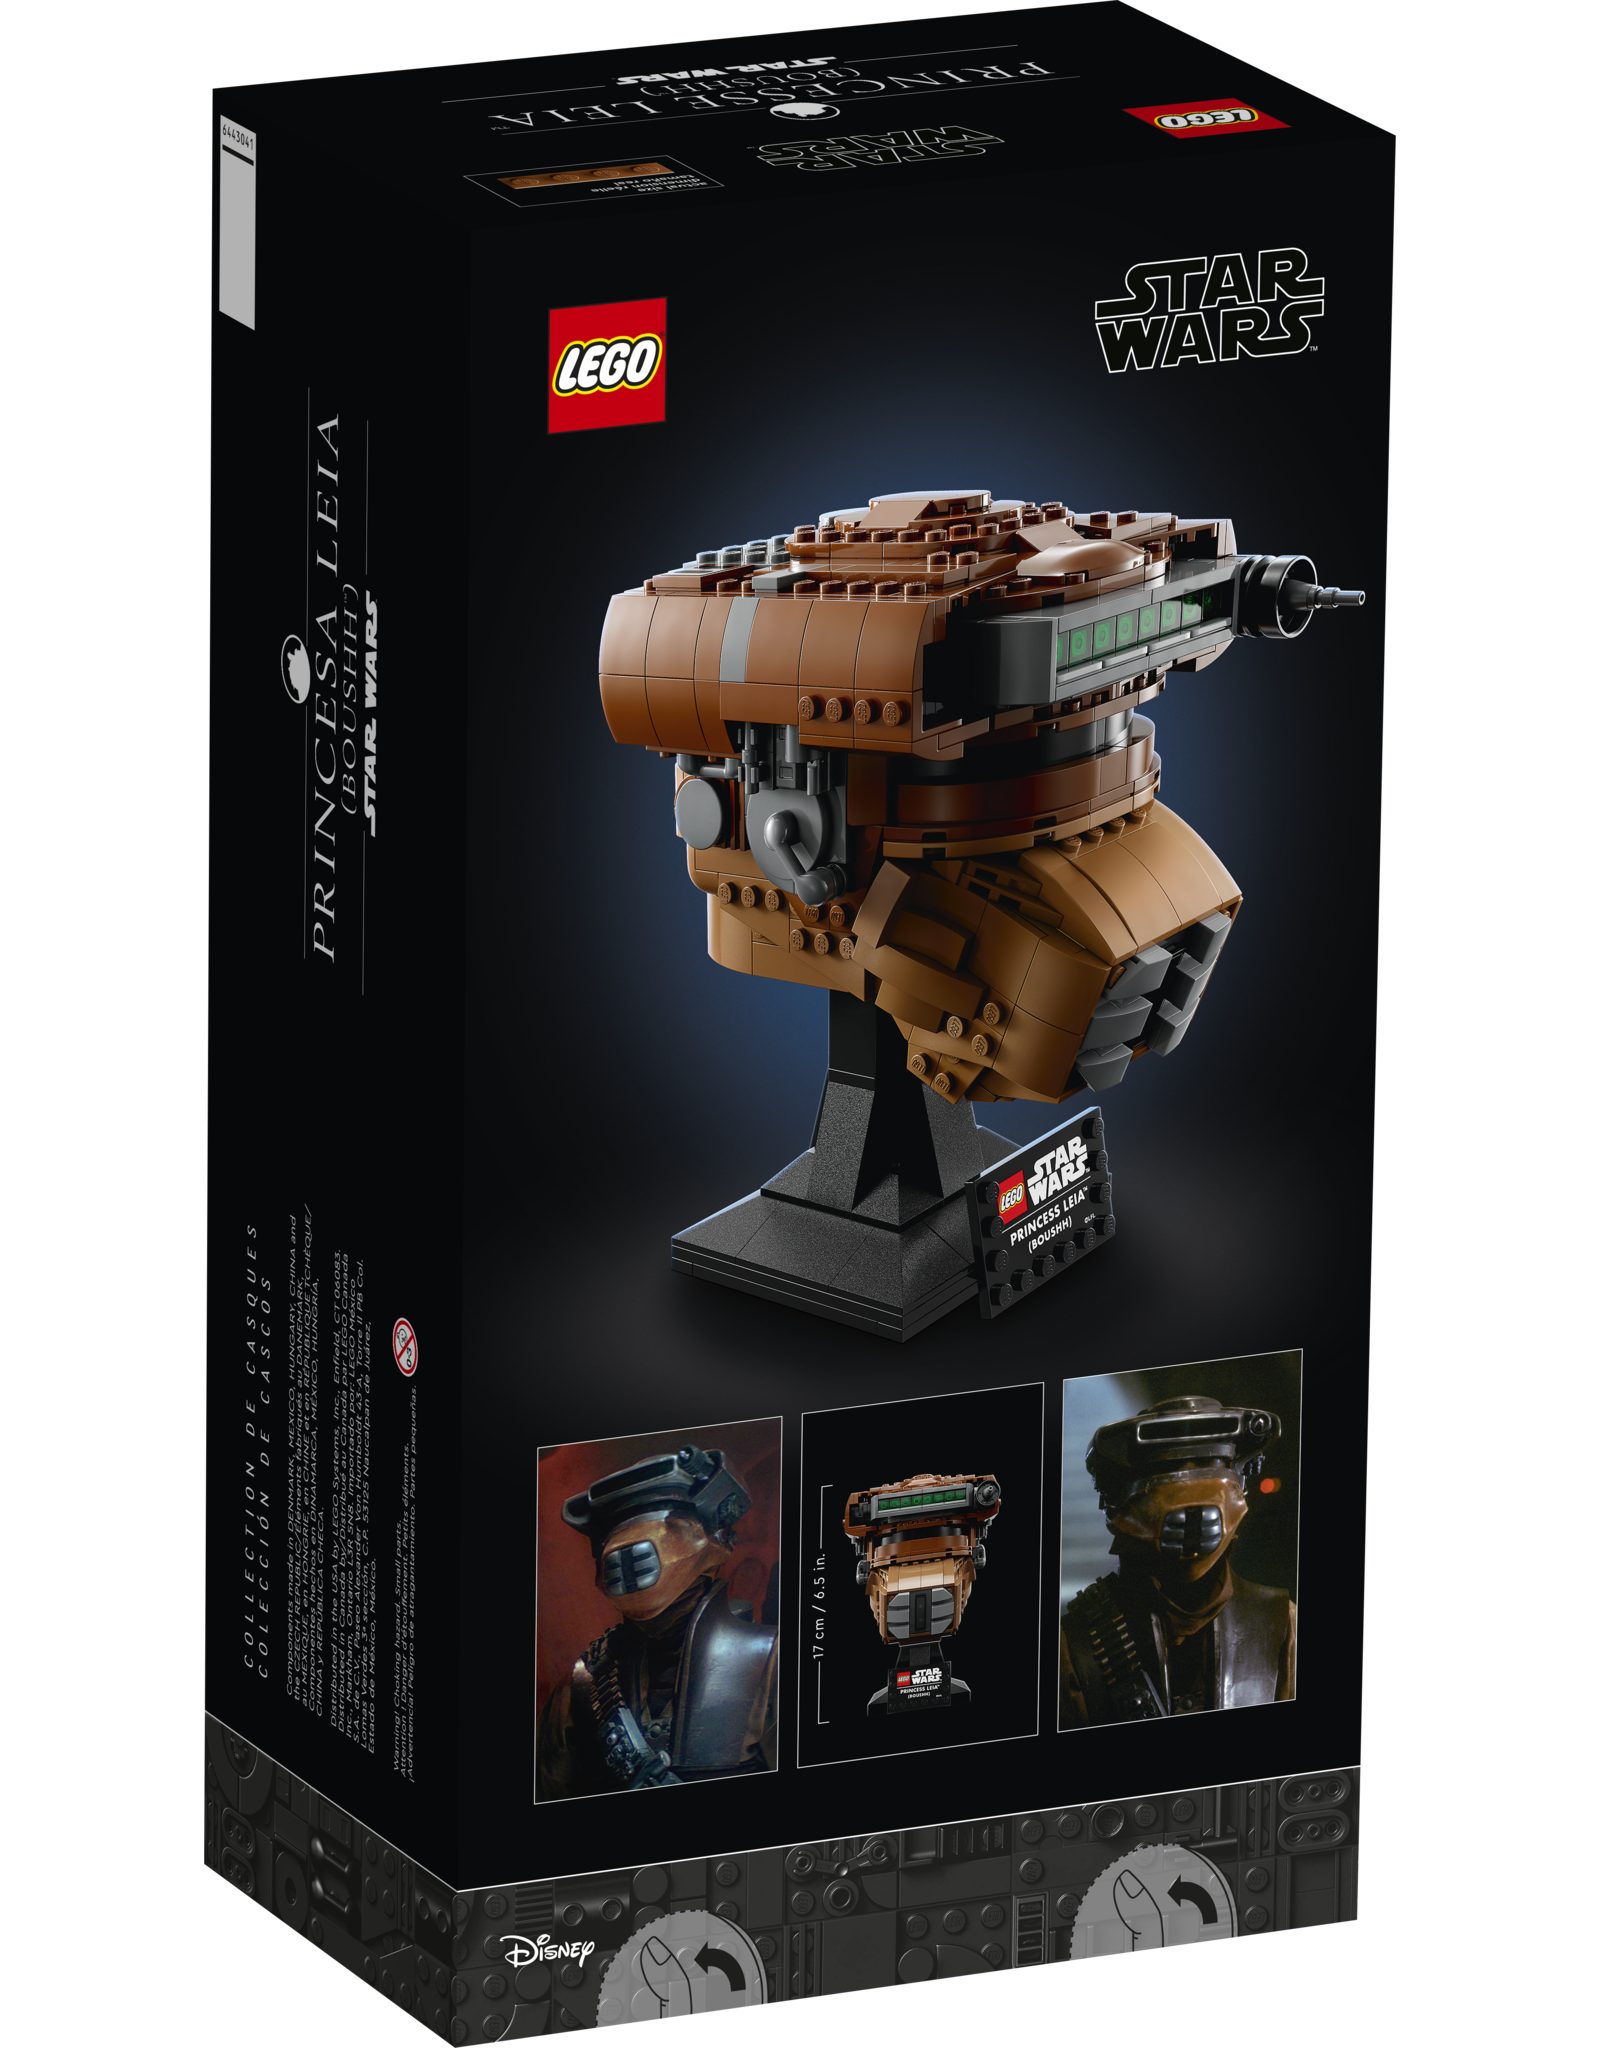 LEGO Star Wars  75351 Princess Leia (Boushh) Helmet